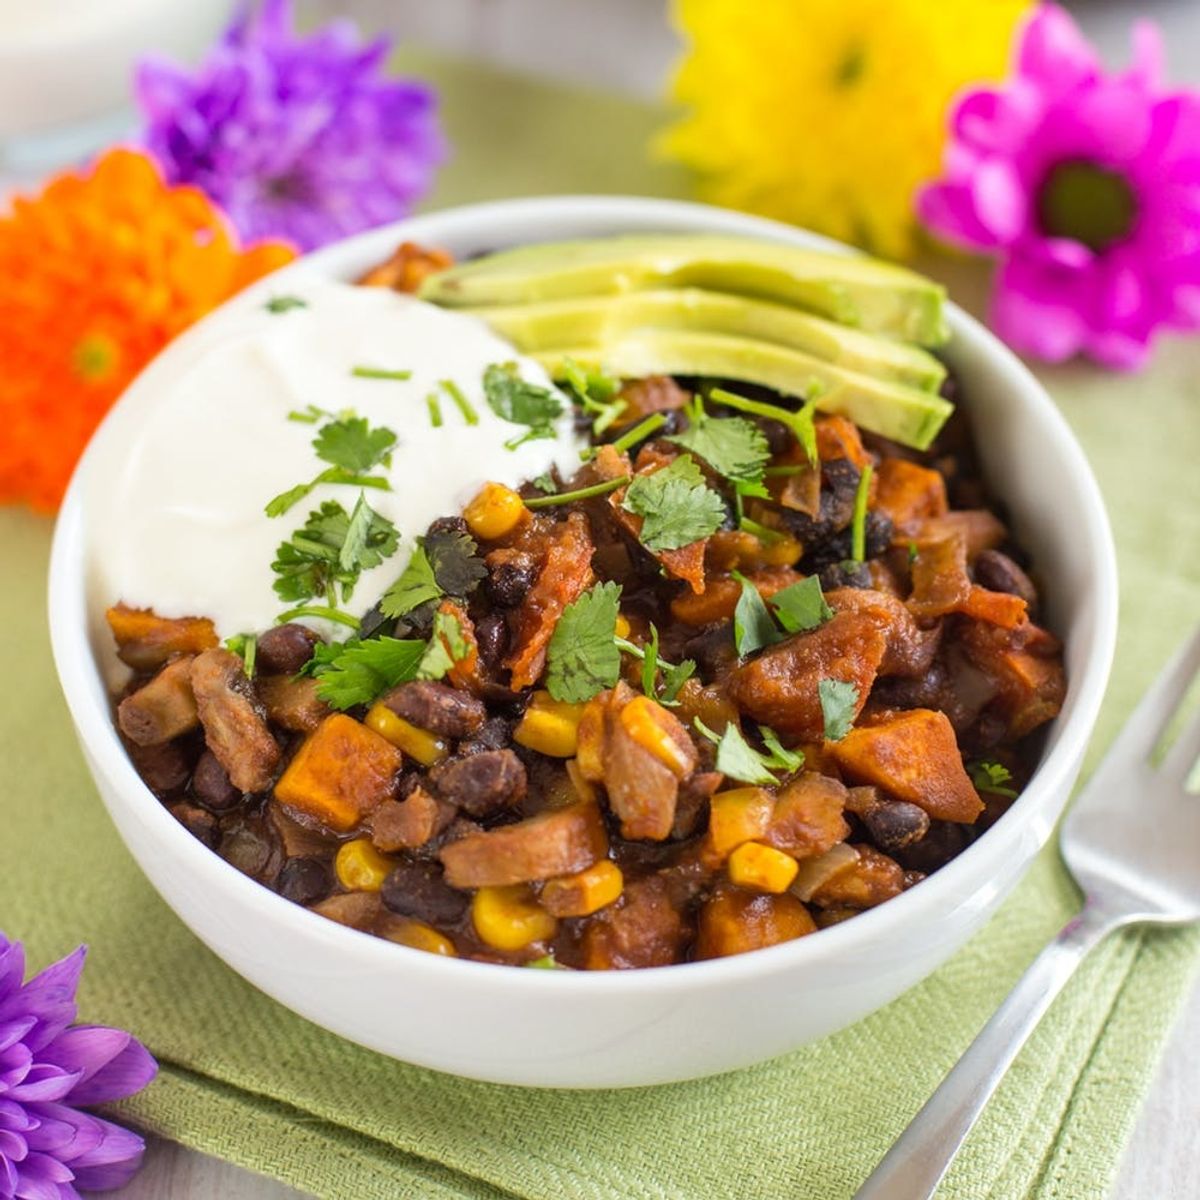 Celebrate Cinco de Mayo With This One-Pot Sweet Potato and Black Bean Chili Recipe